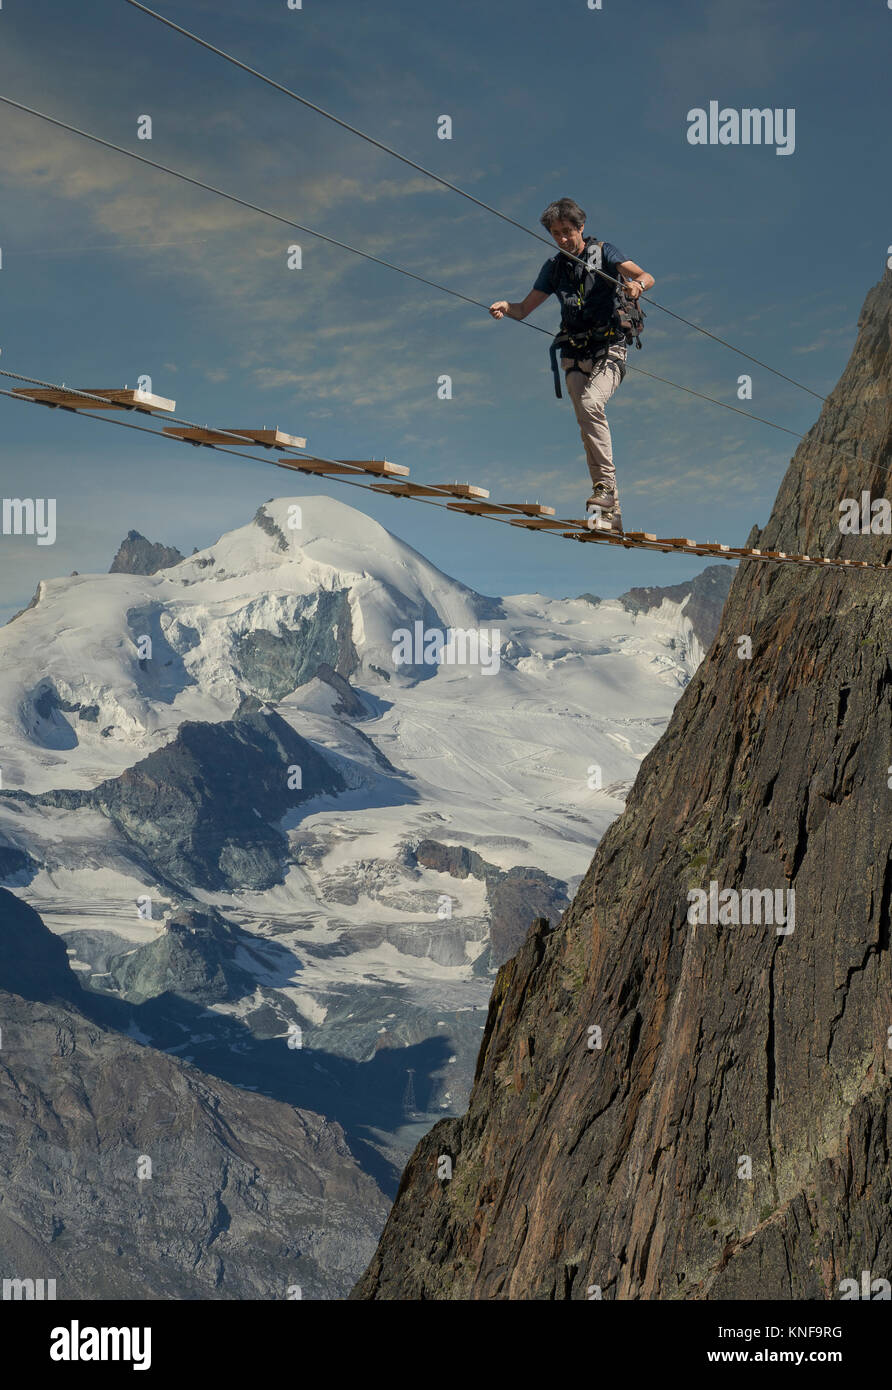 Mature male climber stepping across wire rope bridge, Jegihorn, Valais, Switzerland Stock Photo